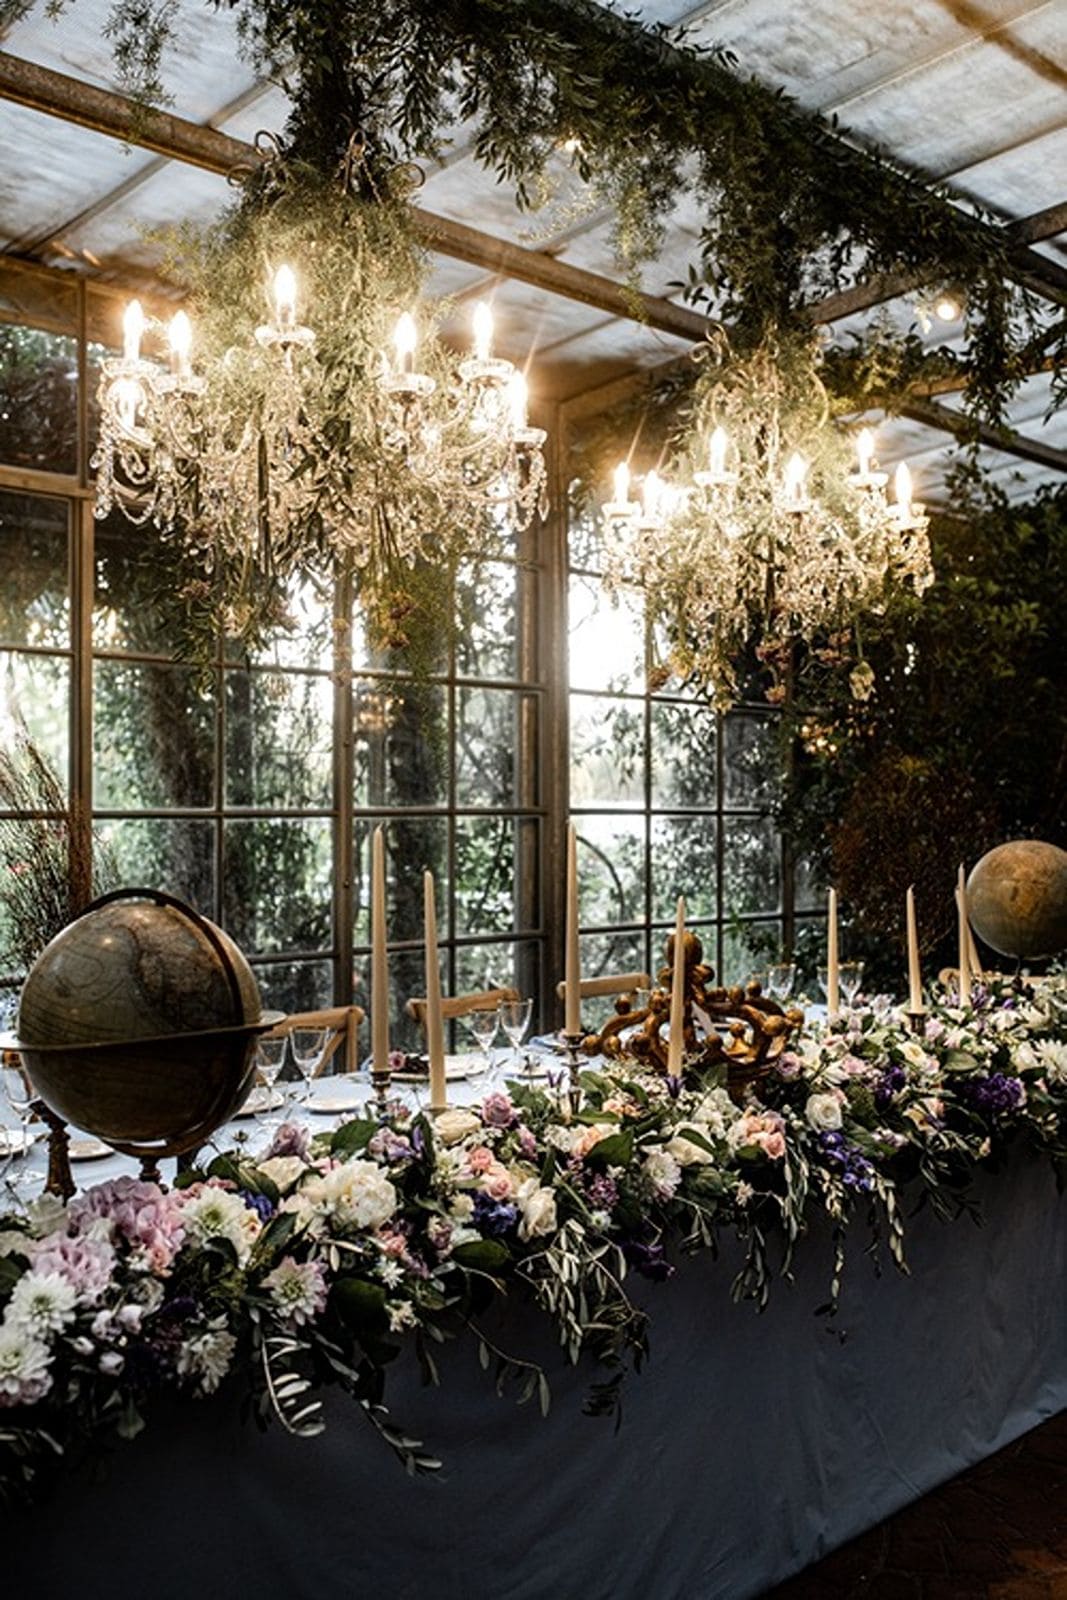 Chandeliers illuminate wedding reception tables